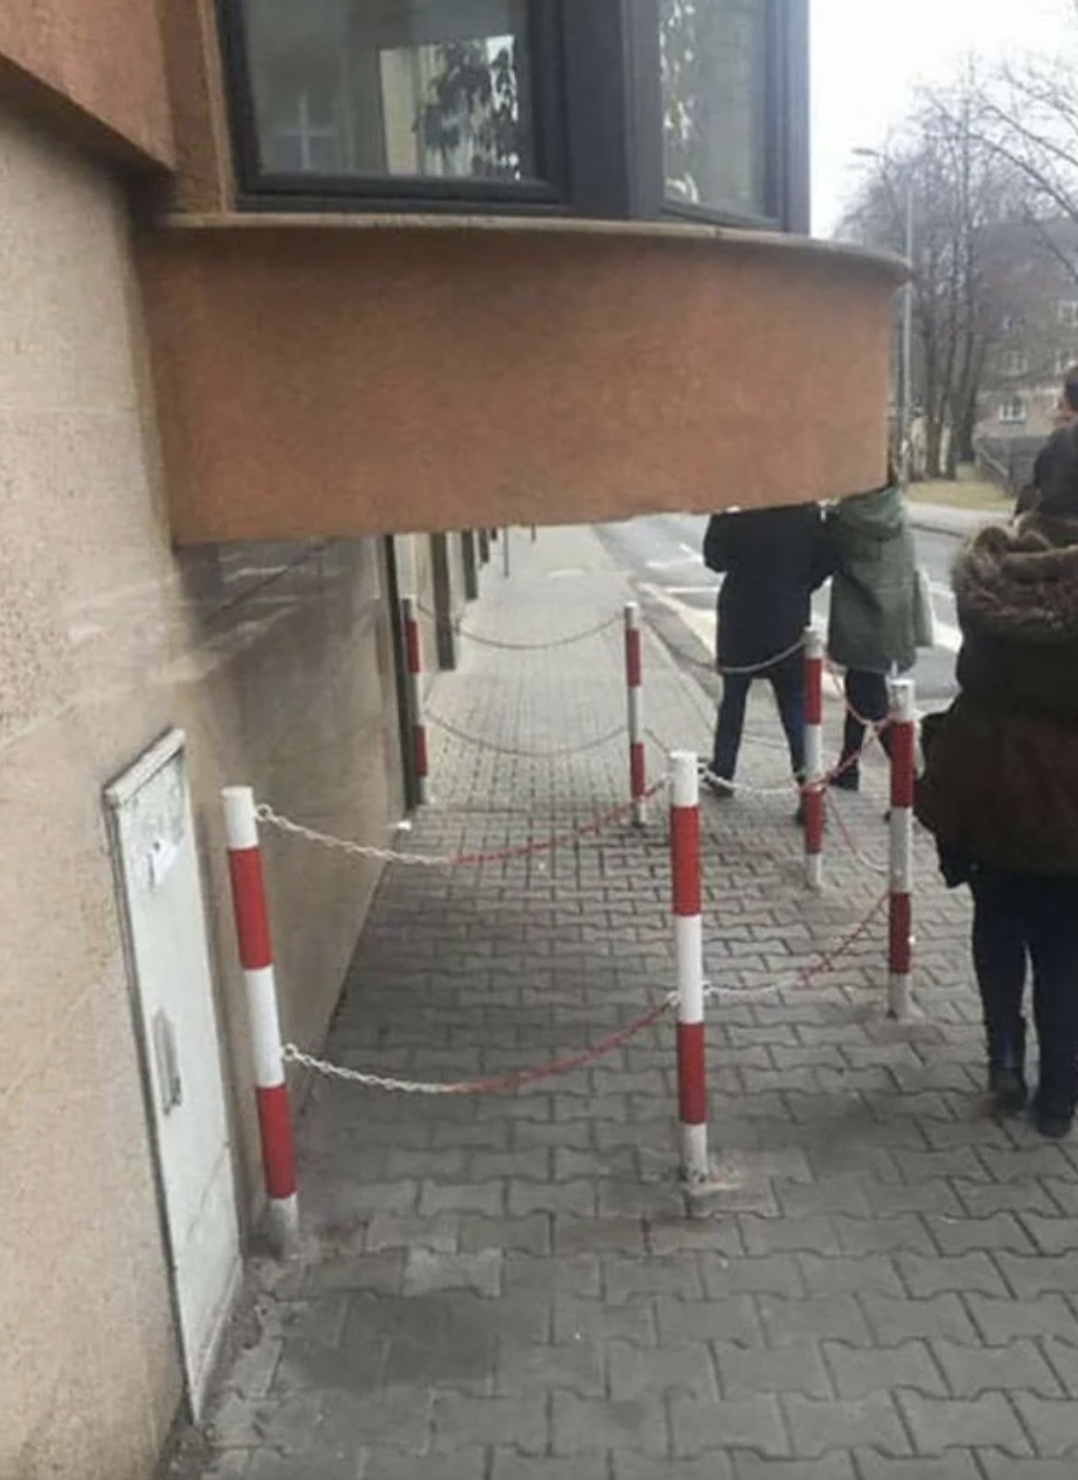 warning poles around the balcony to warn pedestrians